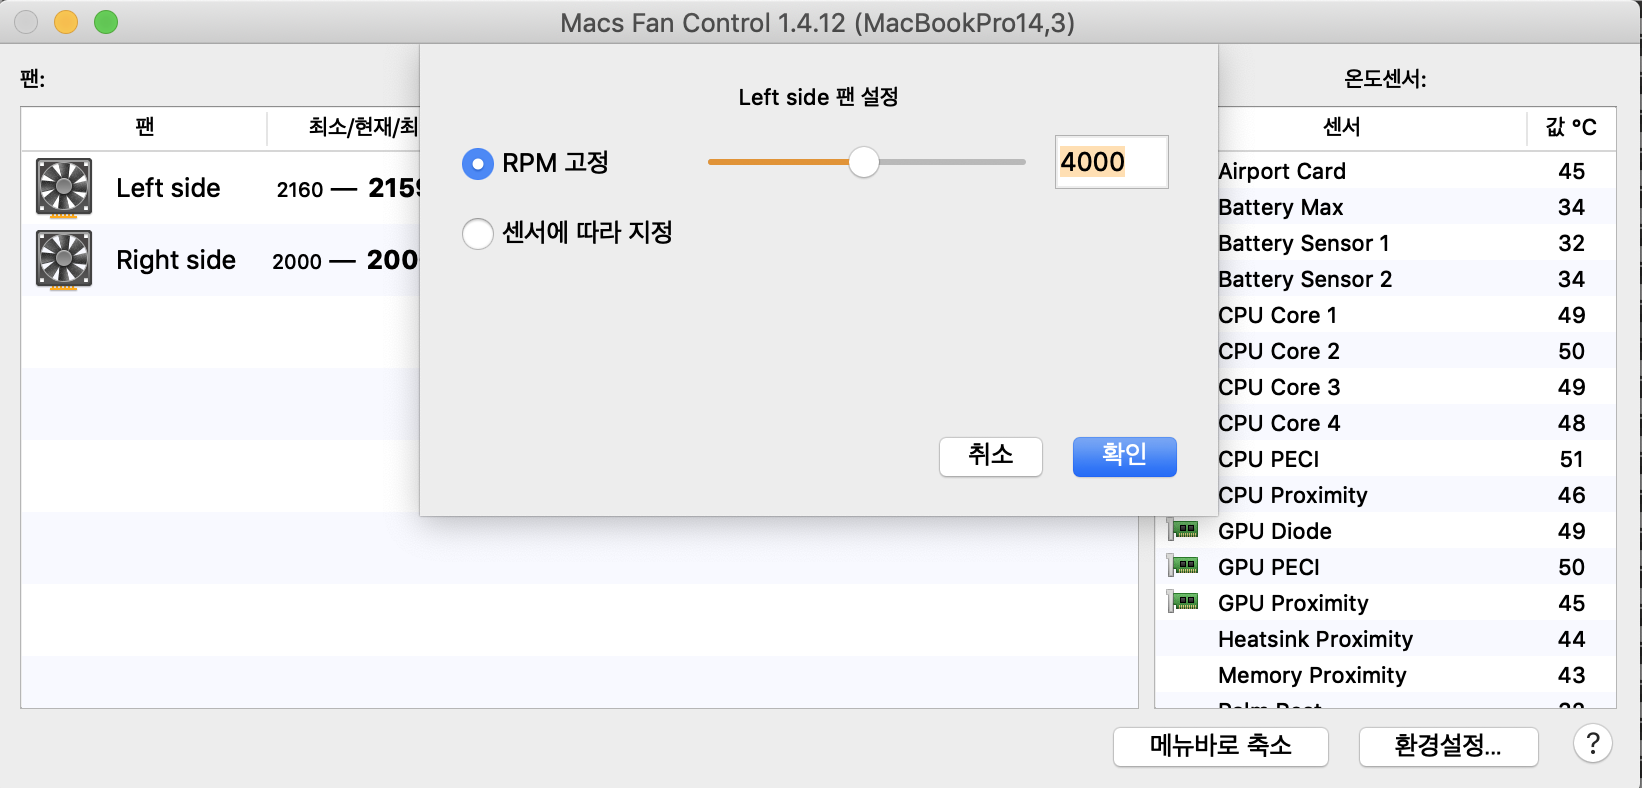 macs fan control linux